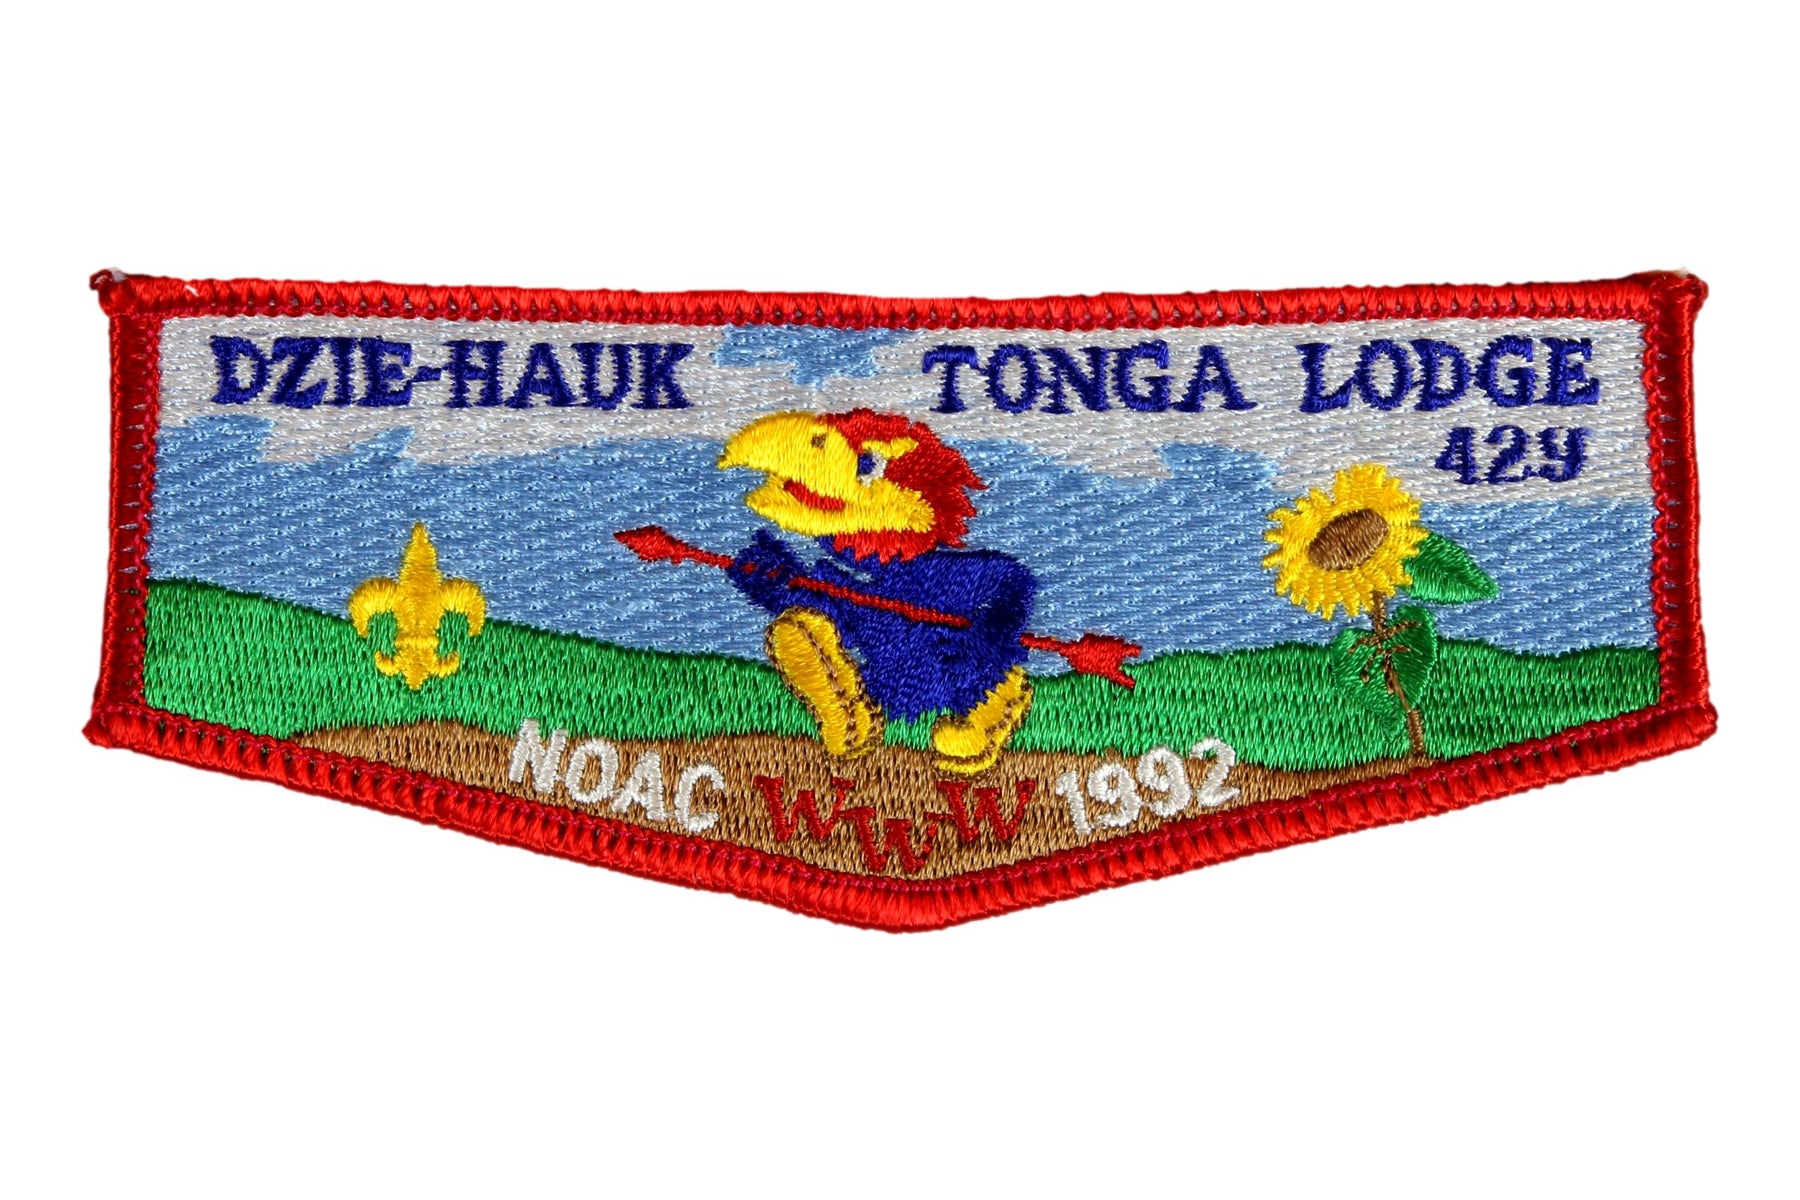 Lodge 429 Dzie-Hauk Tonga Flap S-12